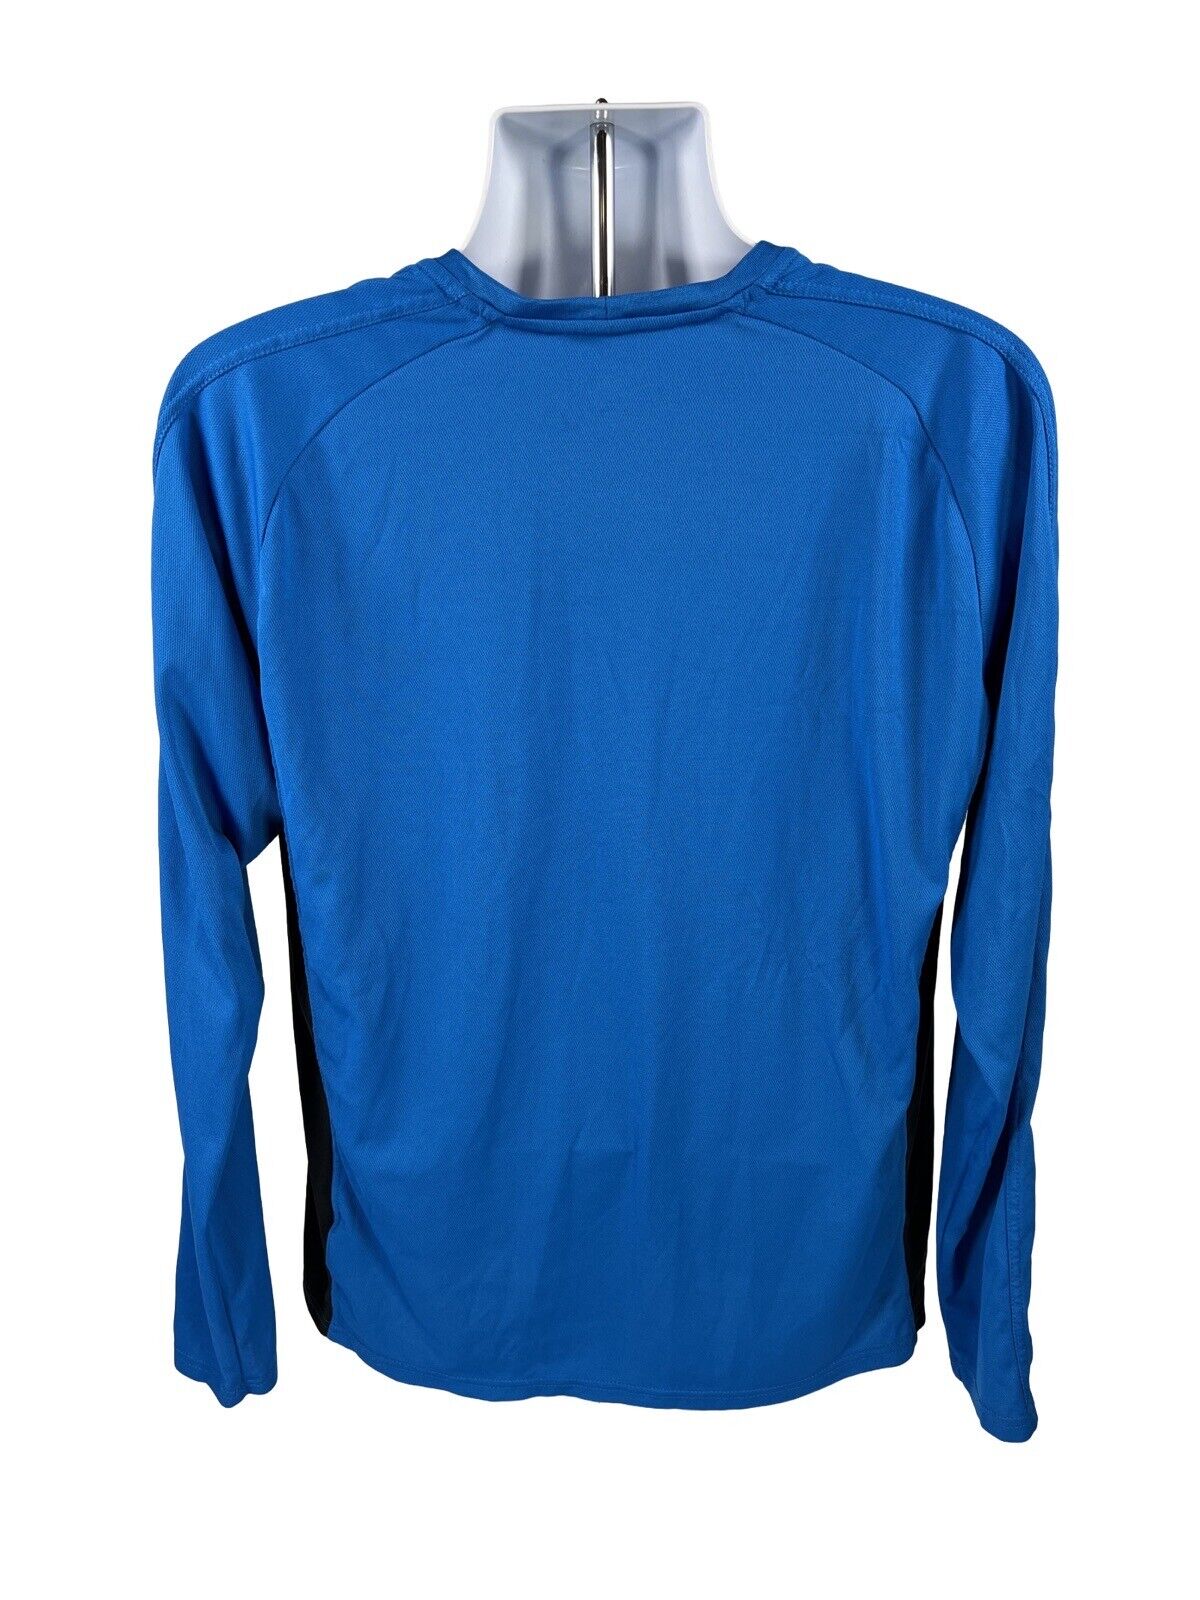 Nike Men's Blue Fit Dry Long Sleeve Athletic Shirt - L